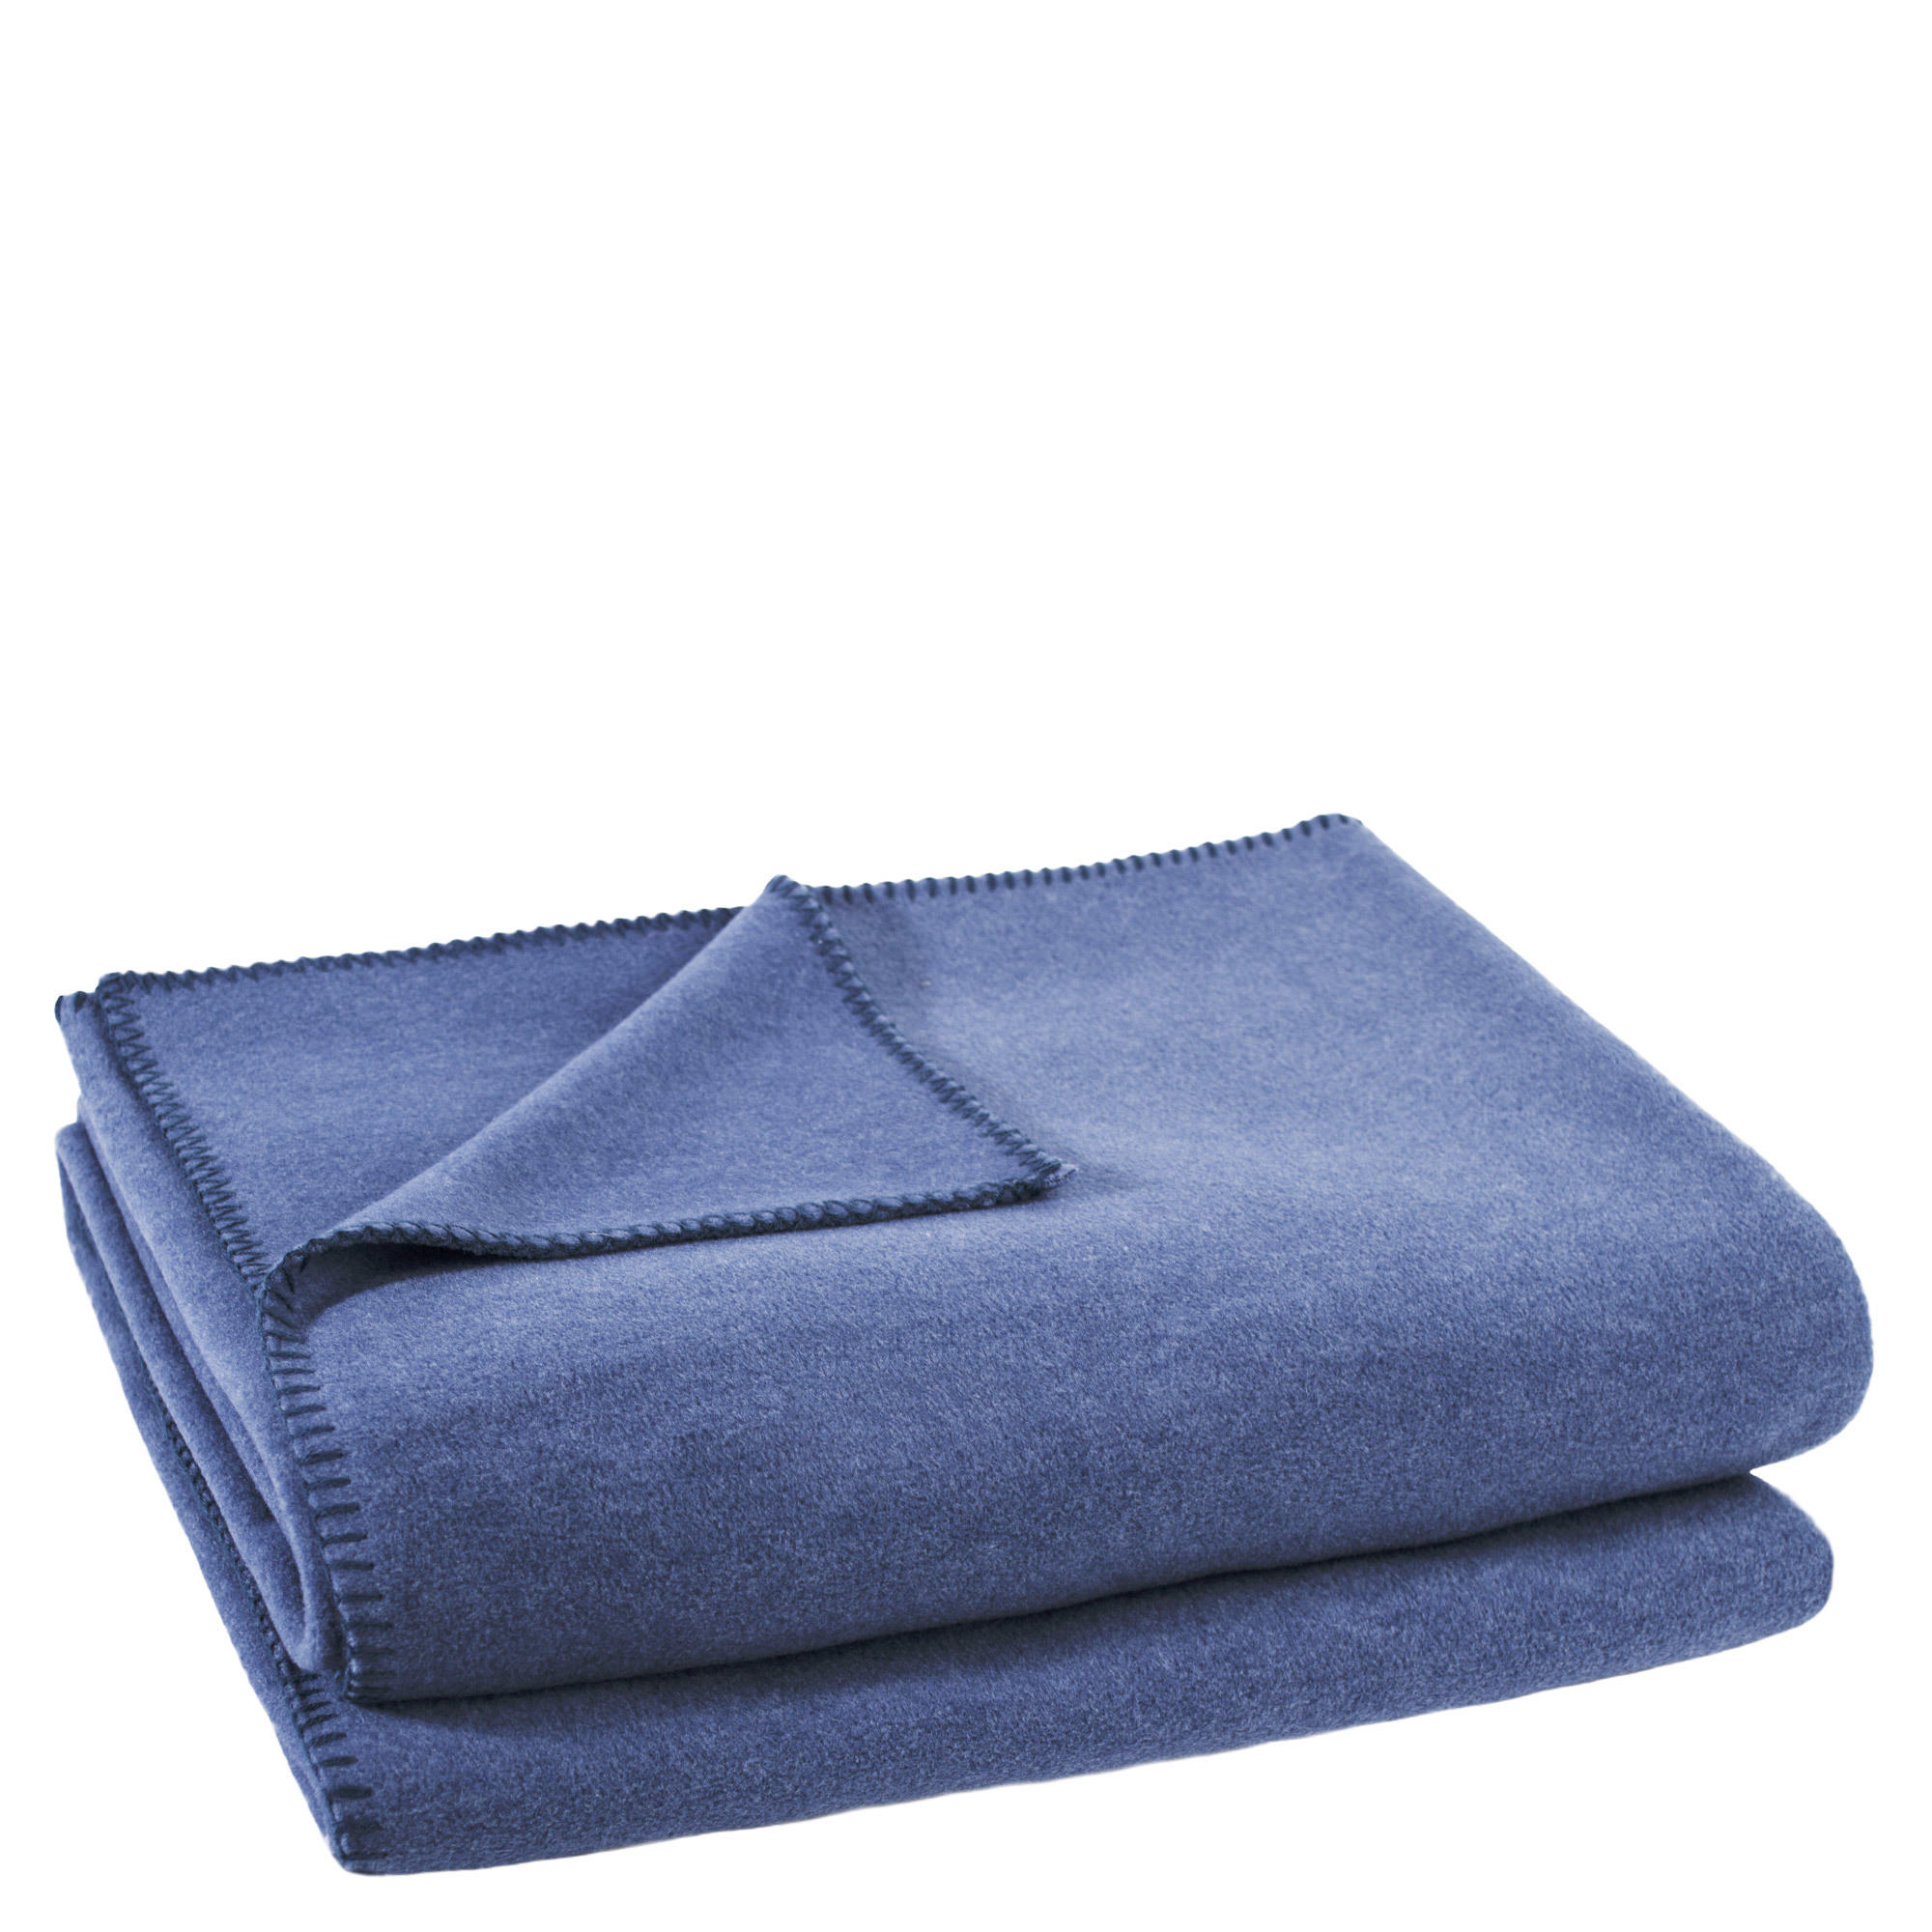 FLEECEDECKE Soft-Fleece 160/200 cm  - Blau, Basics, Textil (160/200cm) - Zoeppritz